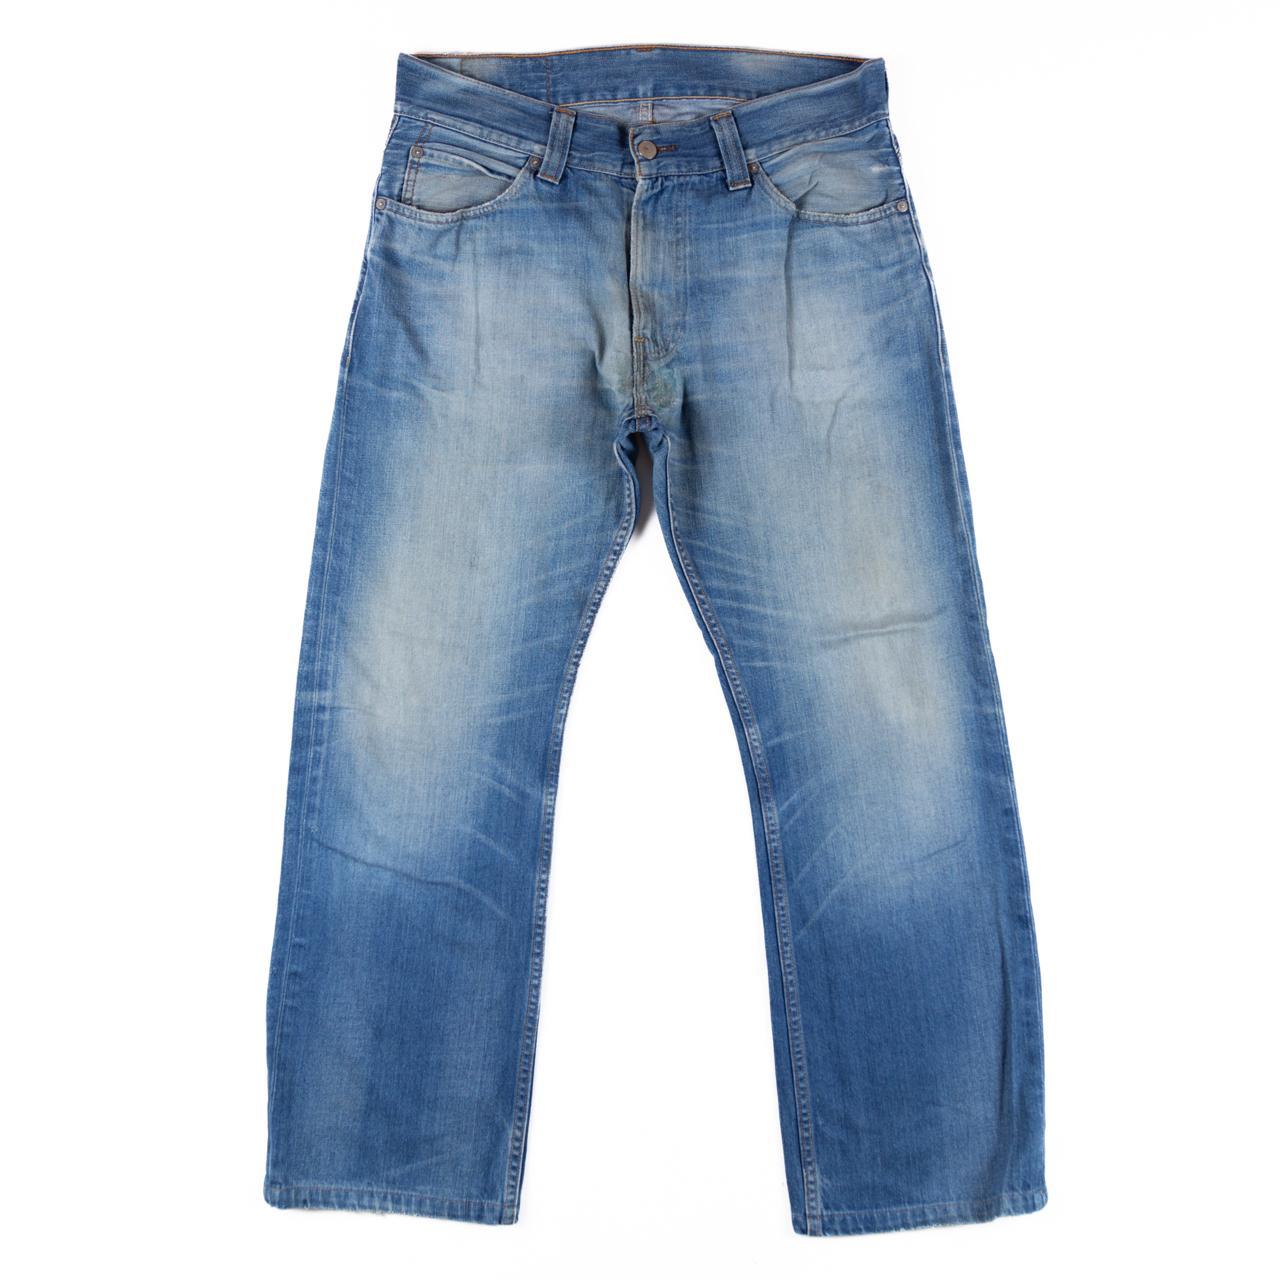 Levi’s 506 Blue Denim Jeans Mens 34W” 28L” Straight... - Depop